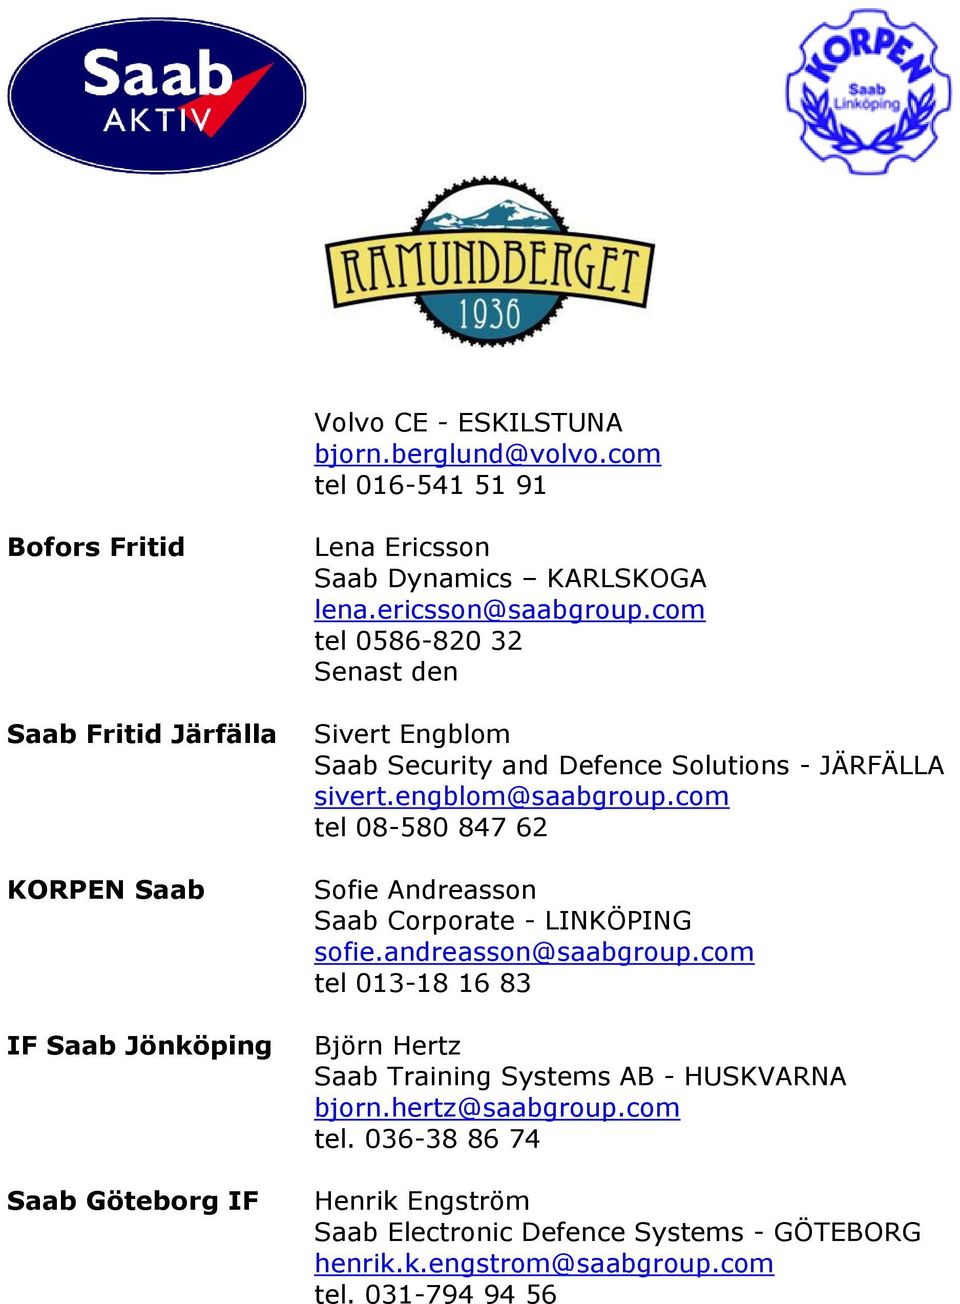 ericsson@saabgroup.com tel 0586-820 32 Senast den Sivert Engblom Saab Security and Defence Solutions - JÄRFÄLLA sivert.engblom@saabgroup.